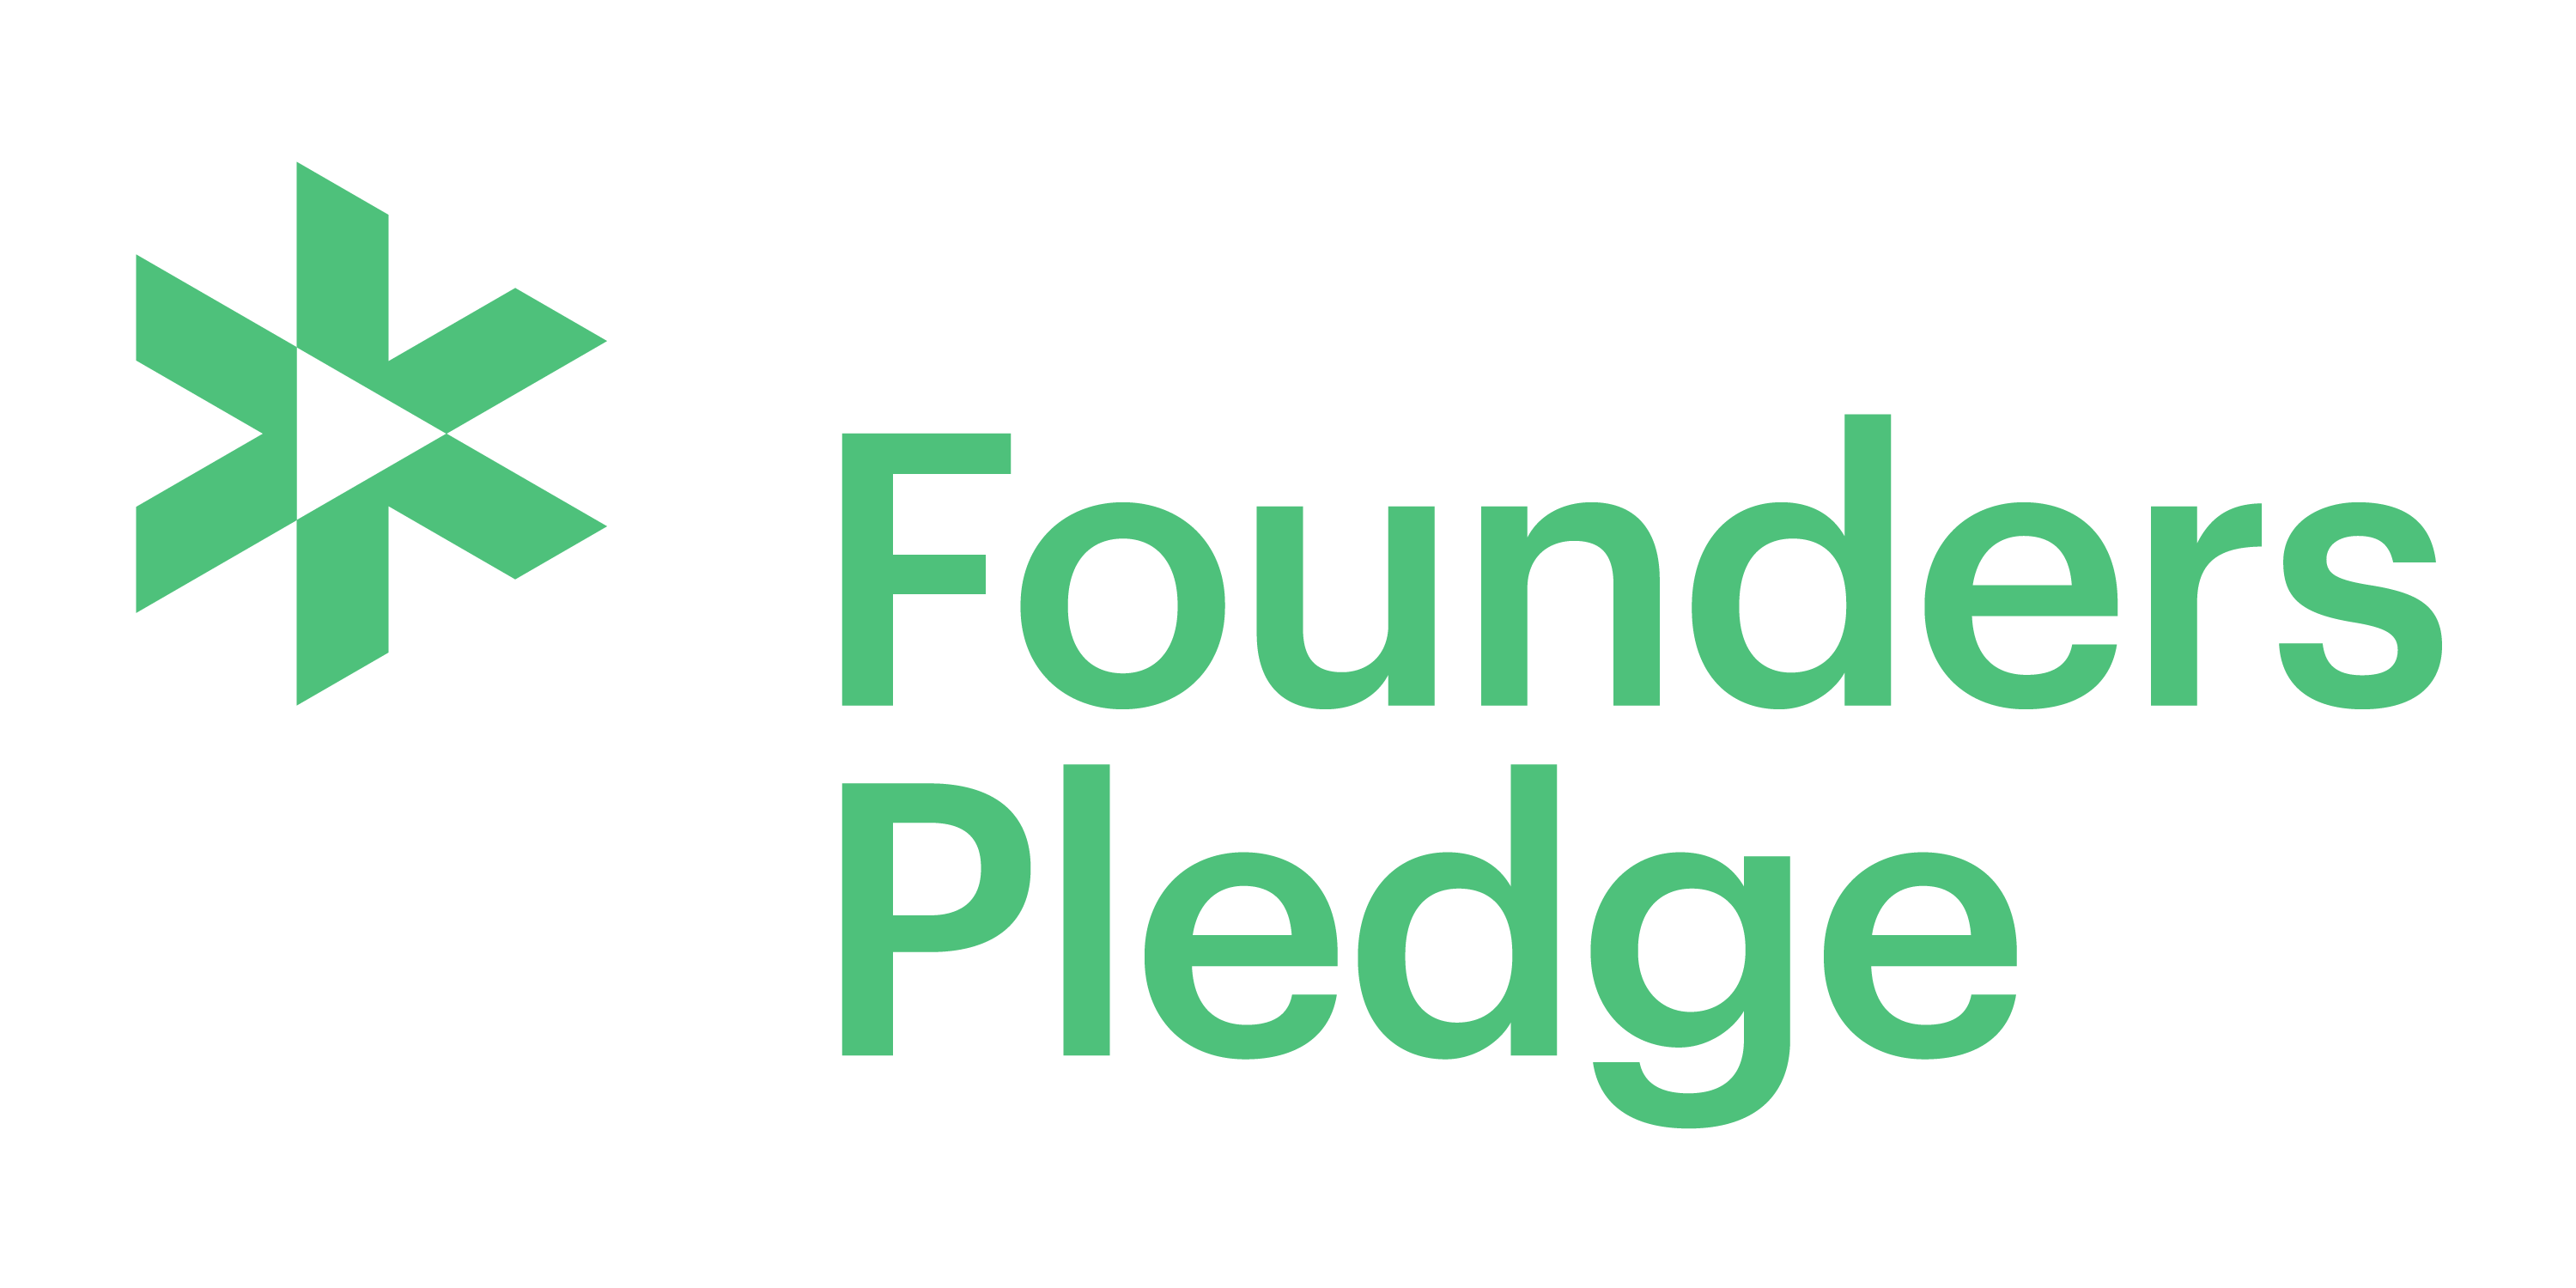 Founders Logo - Founders Pledge - Growth Lead (sales) - UK